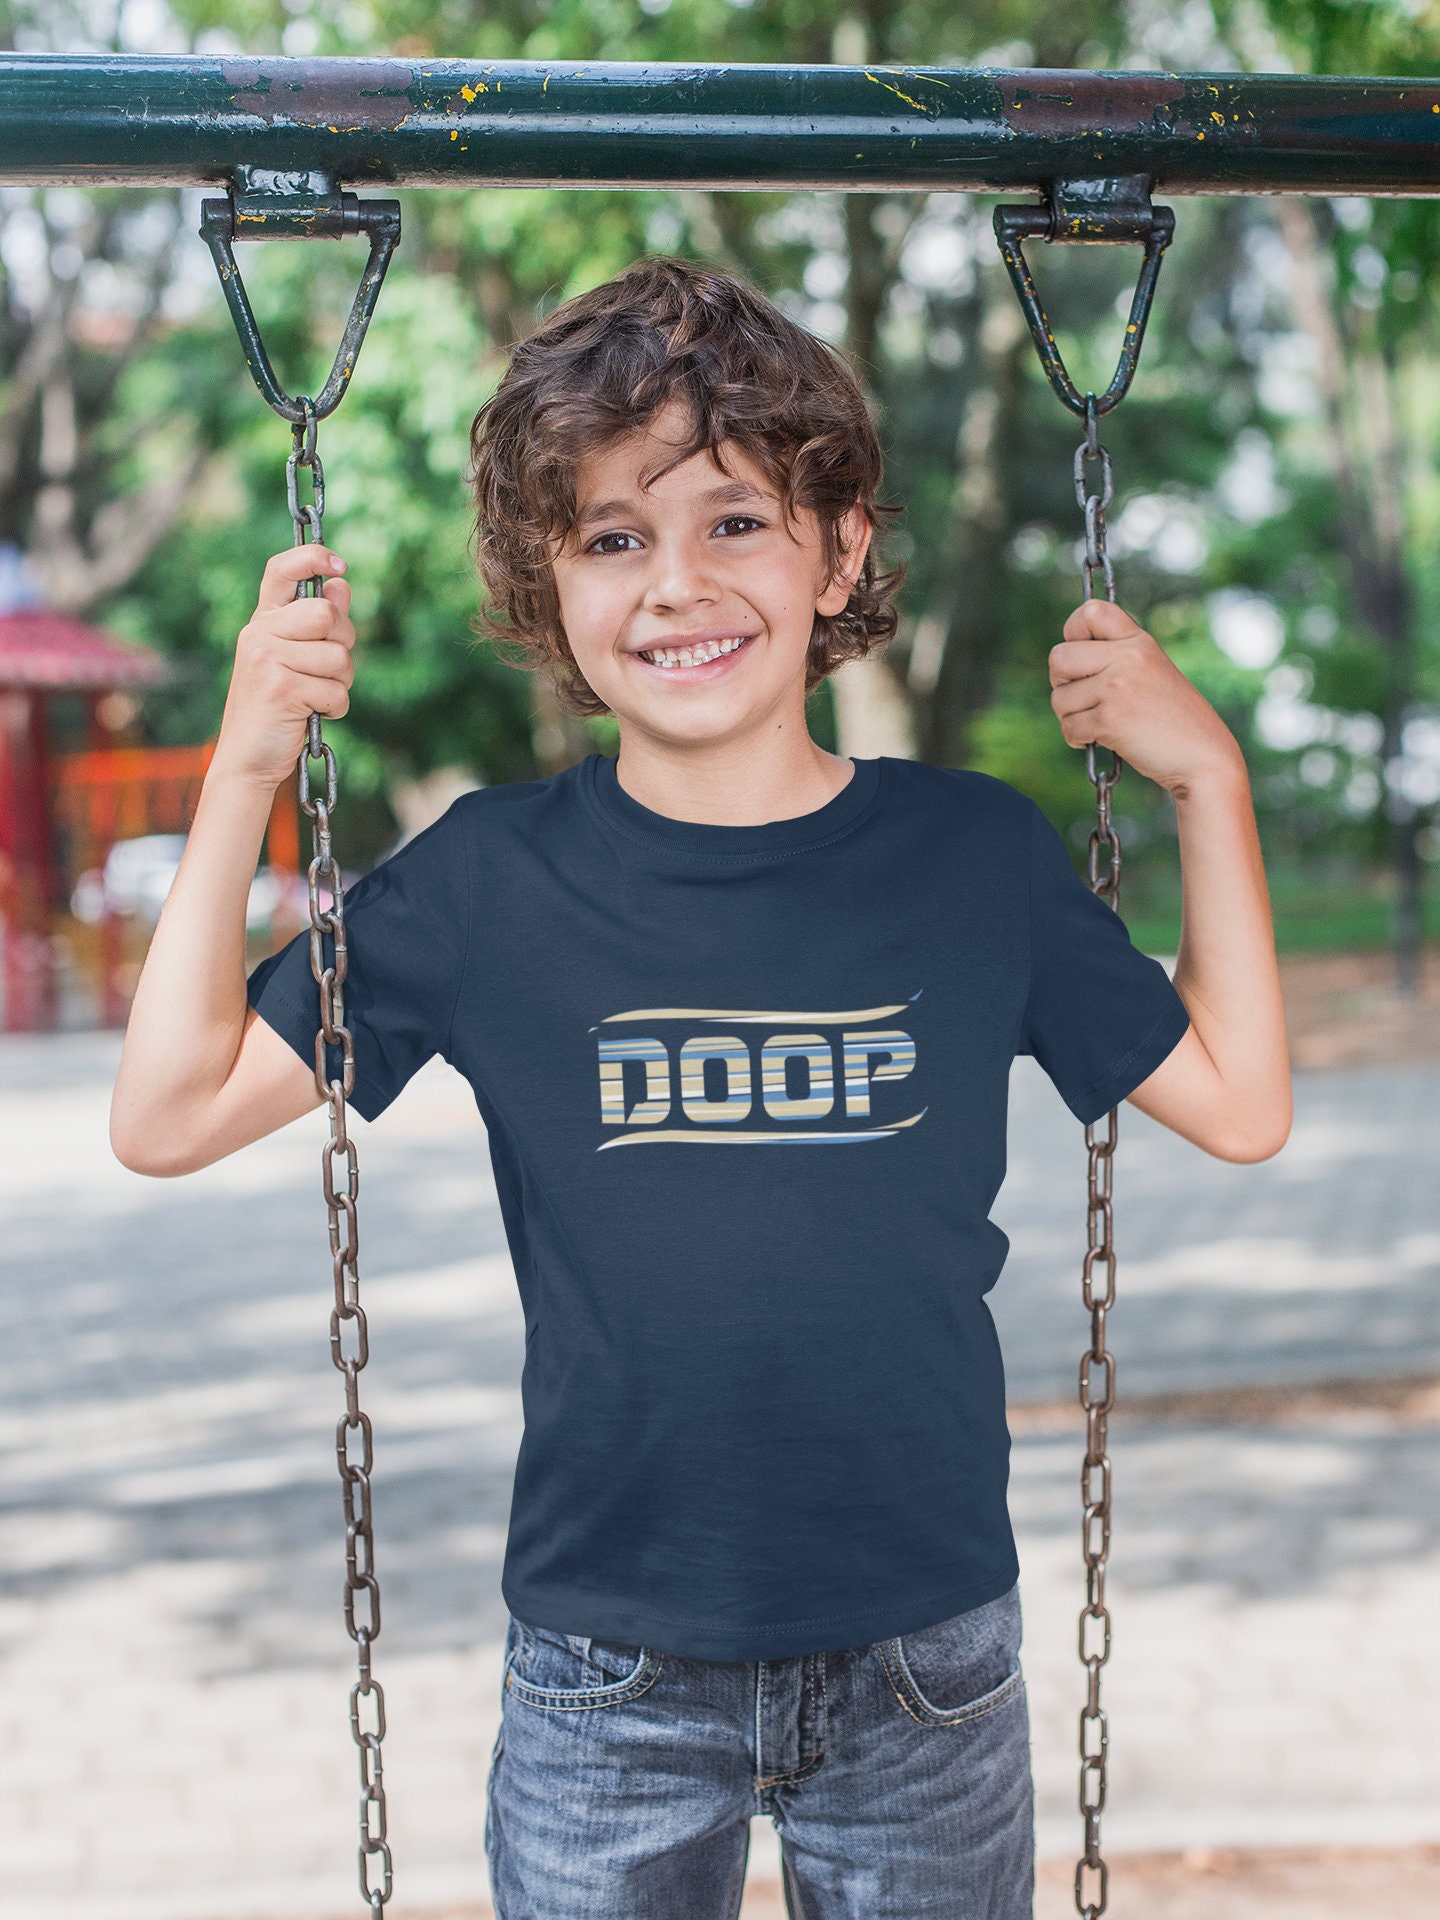 Doop Philly Soccer T-Shirt - Love City Shirts